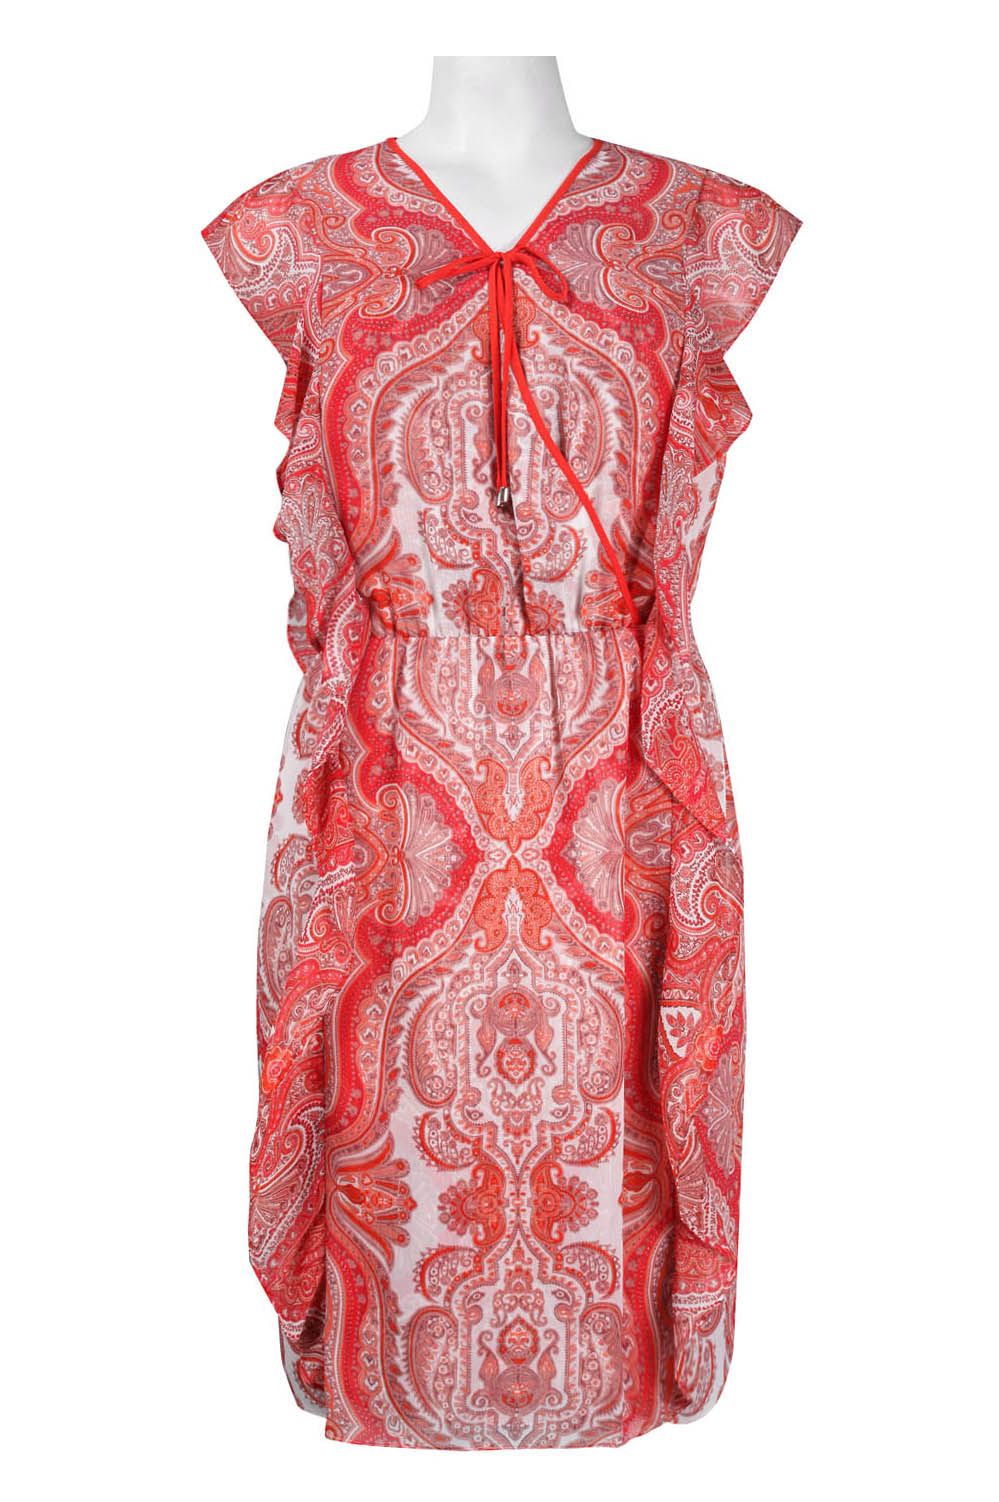 Adrianna Papell Batik Print Chiffon Day Dress Only Size XL(14/16)